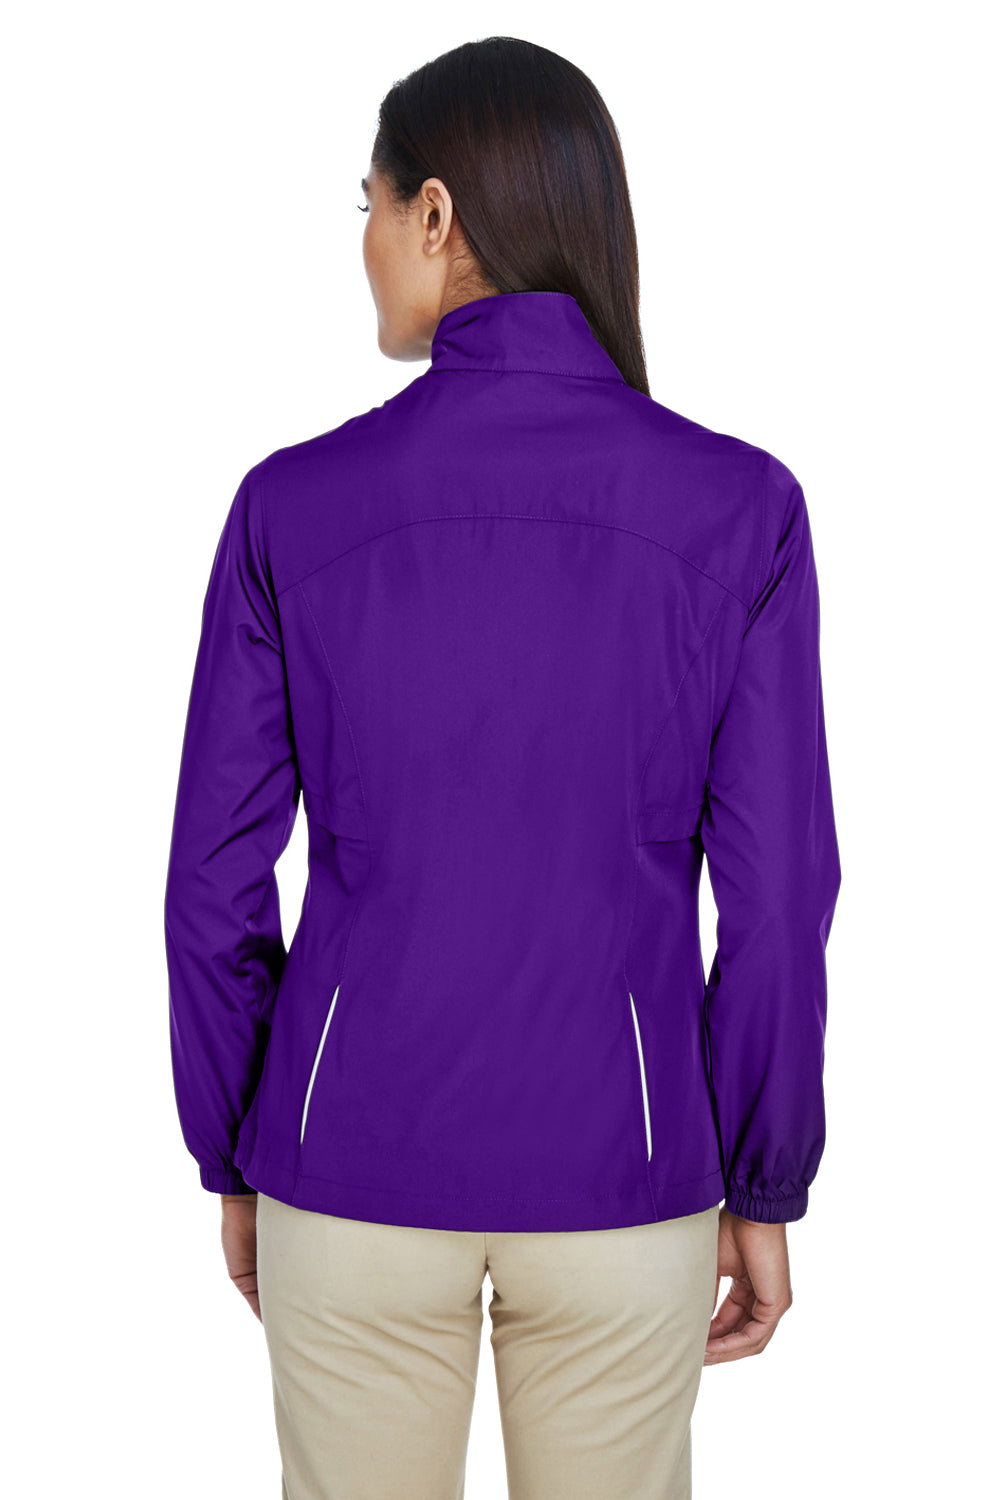 Core 365 78183 Womens Motivate Water Resistant Full Zip Jacket Purple Back